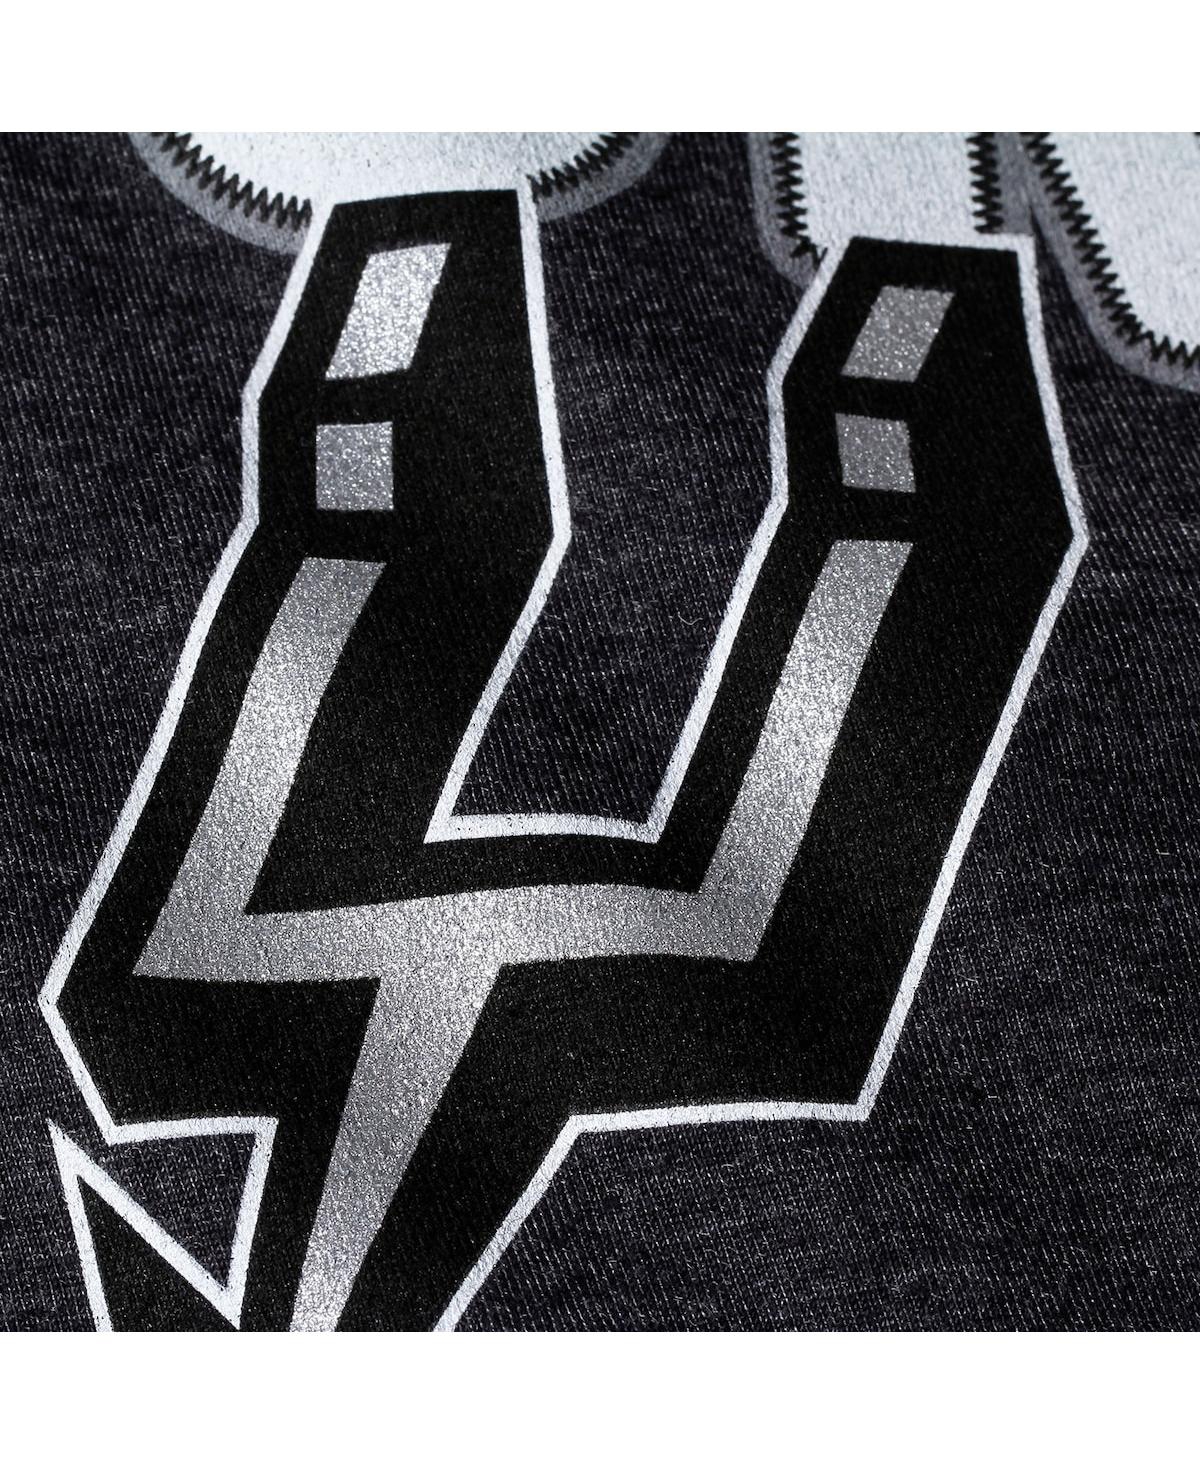 Shop Adidas Originals Women's Adidas Lamarcus Aldridge Black San Antonio Spurs Name & Number T-shirt